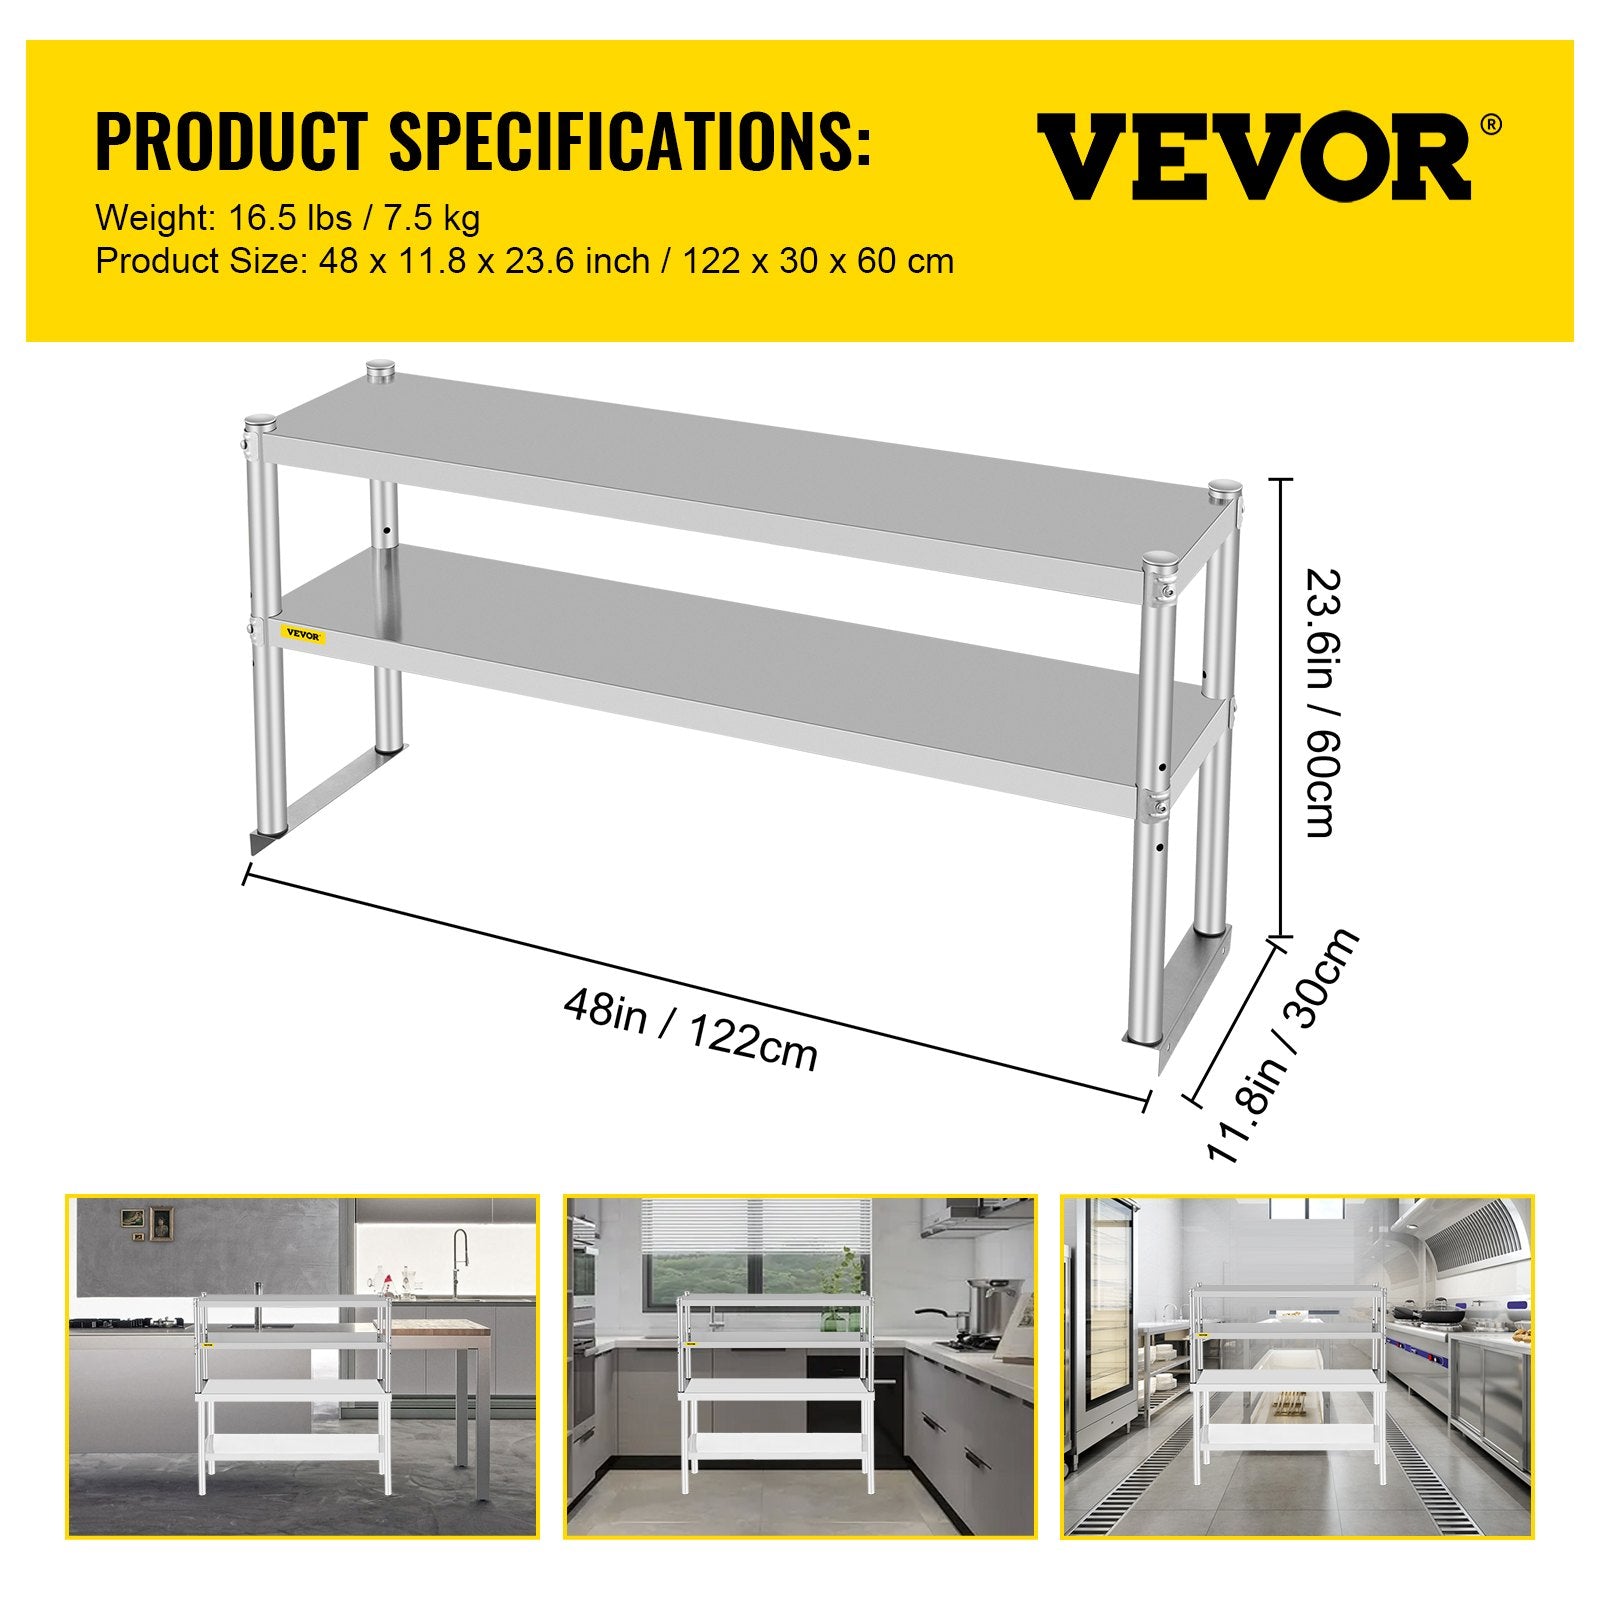 VEVOR Double Overshelf, Double Tier Stainless Steel Overshelf, 48 x 12 x 24 in Double Deck Overshelf, Height Adjustable Overshelf for Prep & Work Table in Kitchen, Restaurant-5